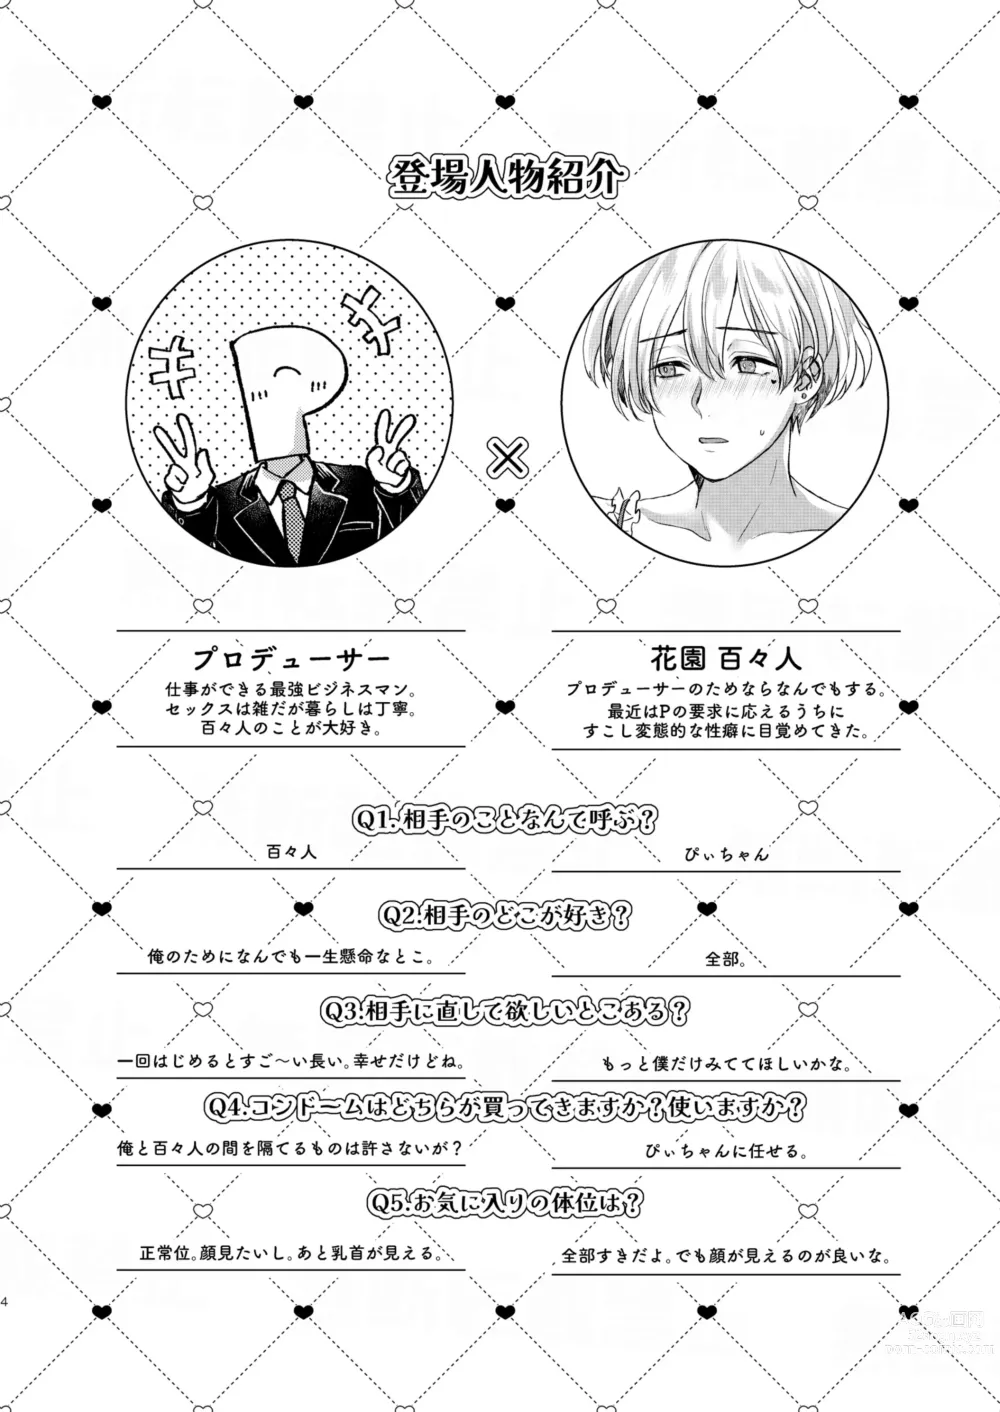 Page 4 of doujinshi キミのこと全部知りたい。